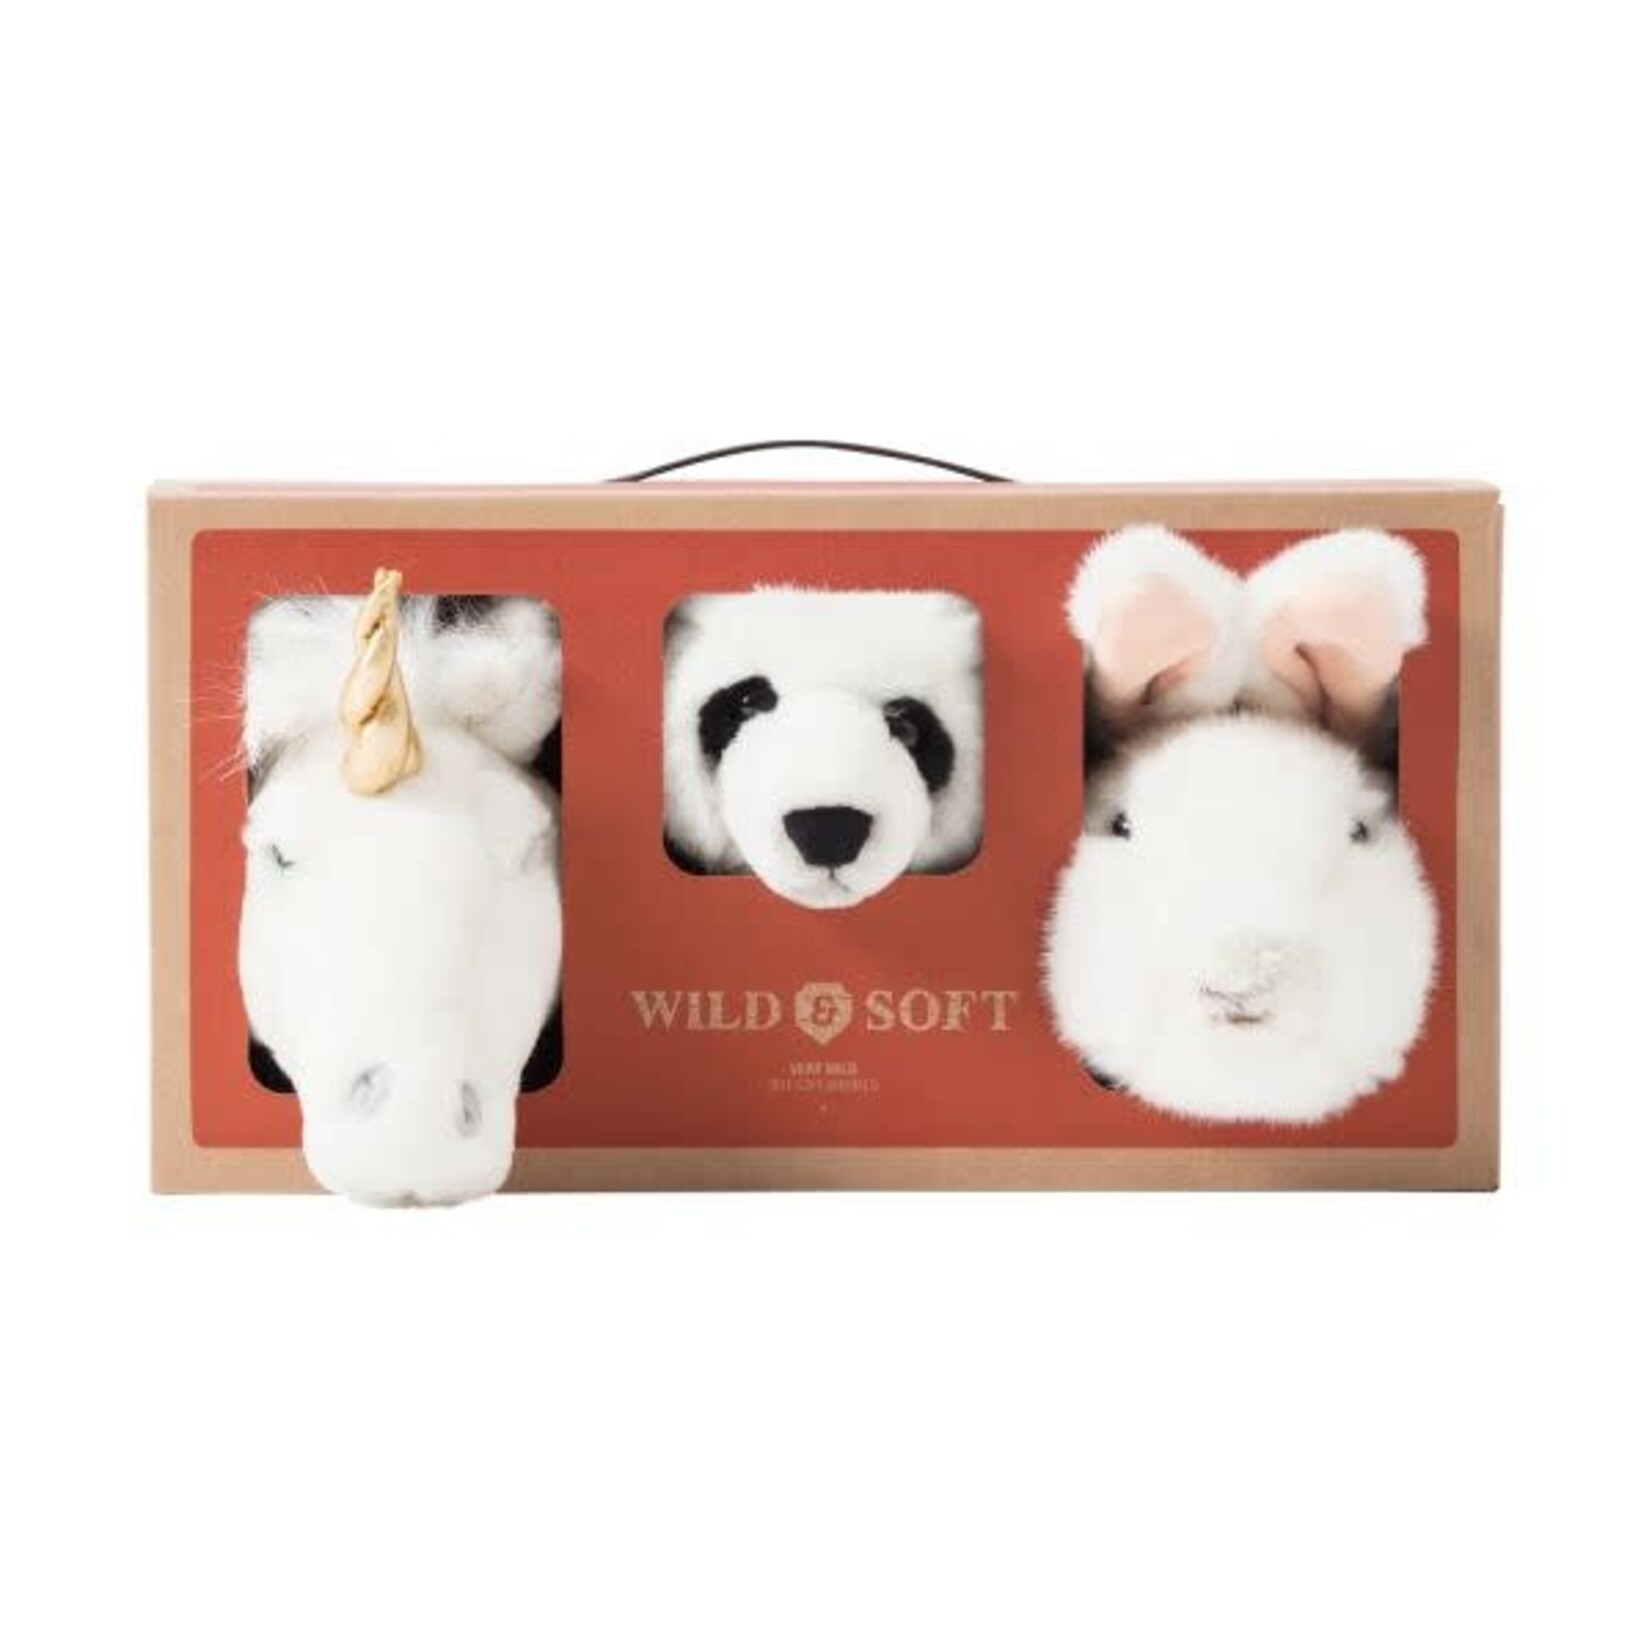 Wild & Soft Wild & Soft - Lovely box mini